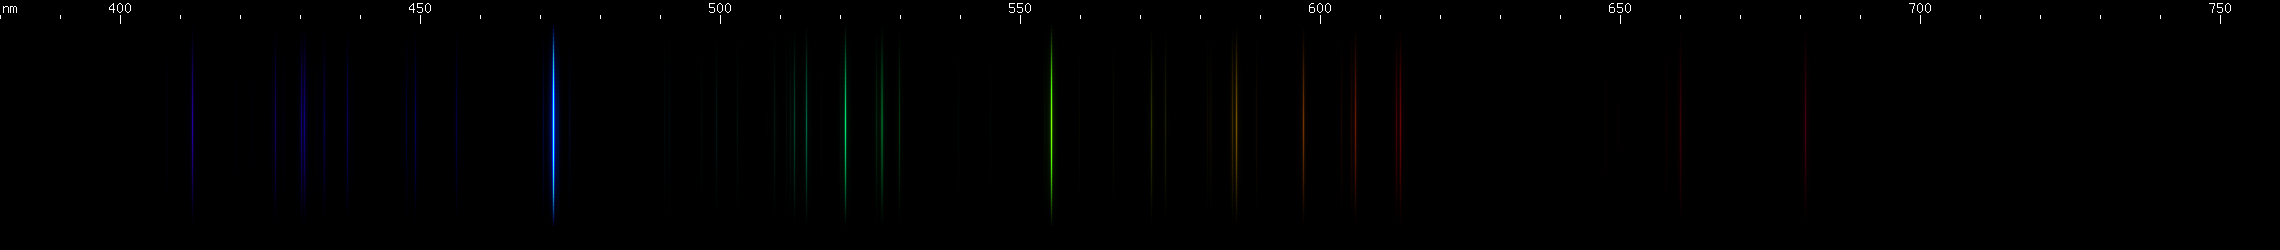 Spectral lines of Bismuth.